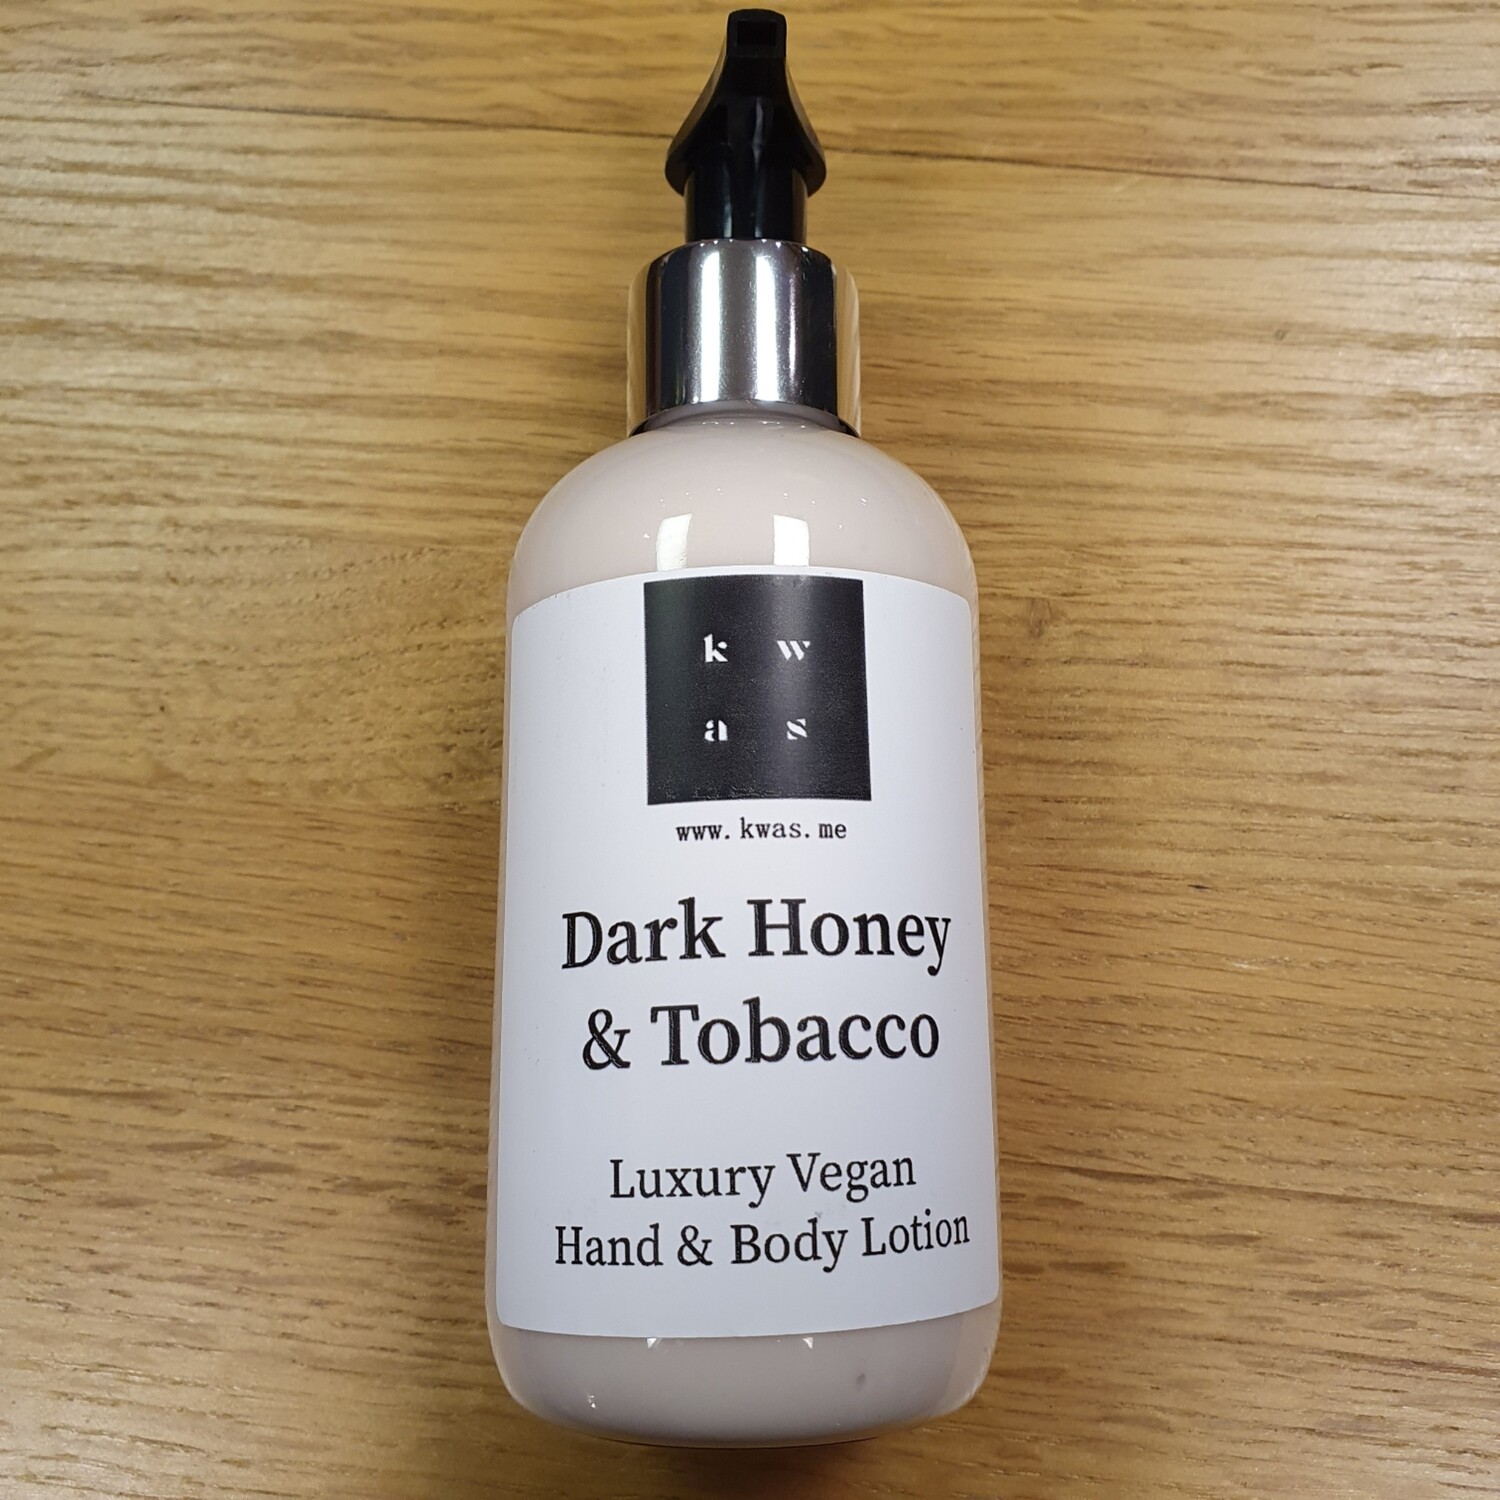 Dark Honey and Tobacco / Hand & Body Lotion